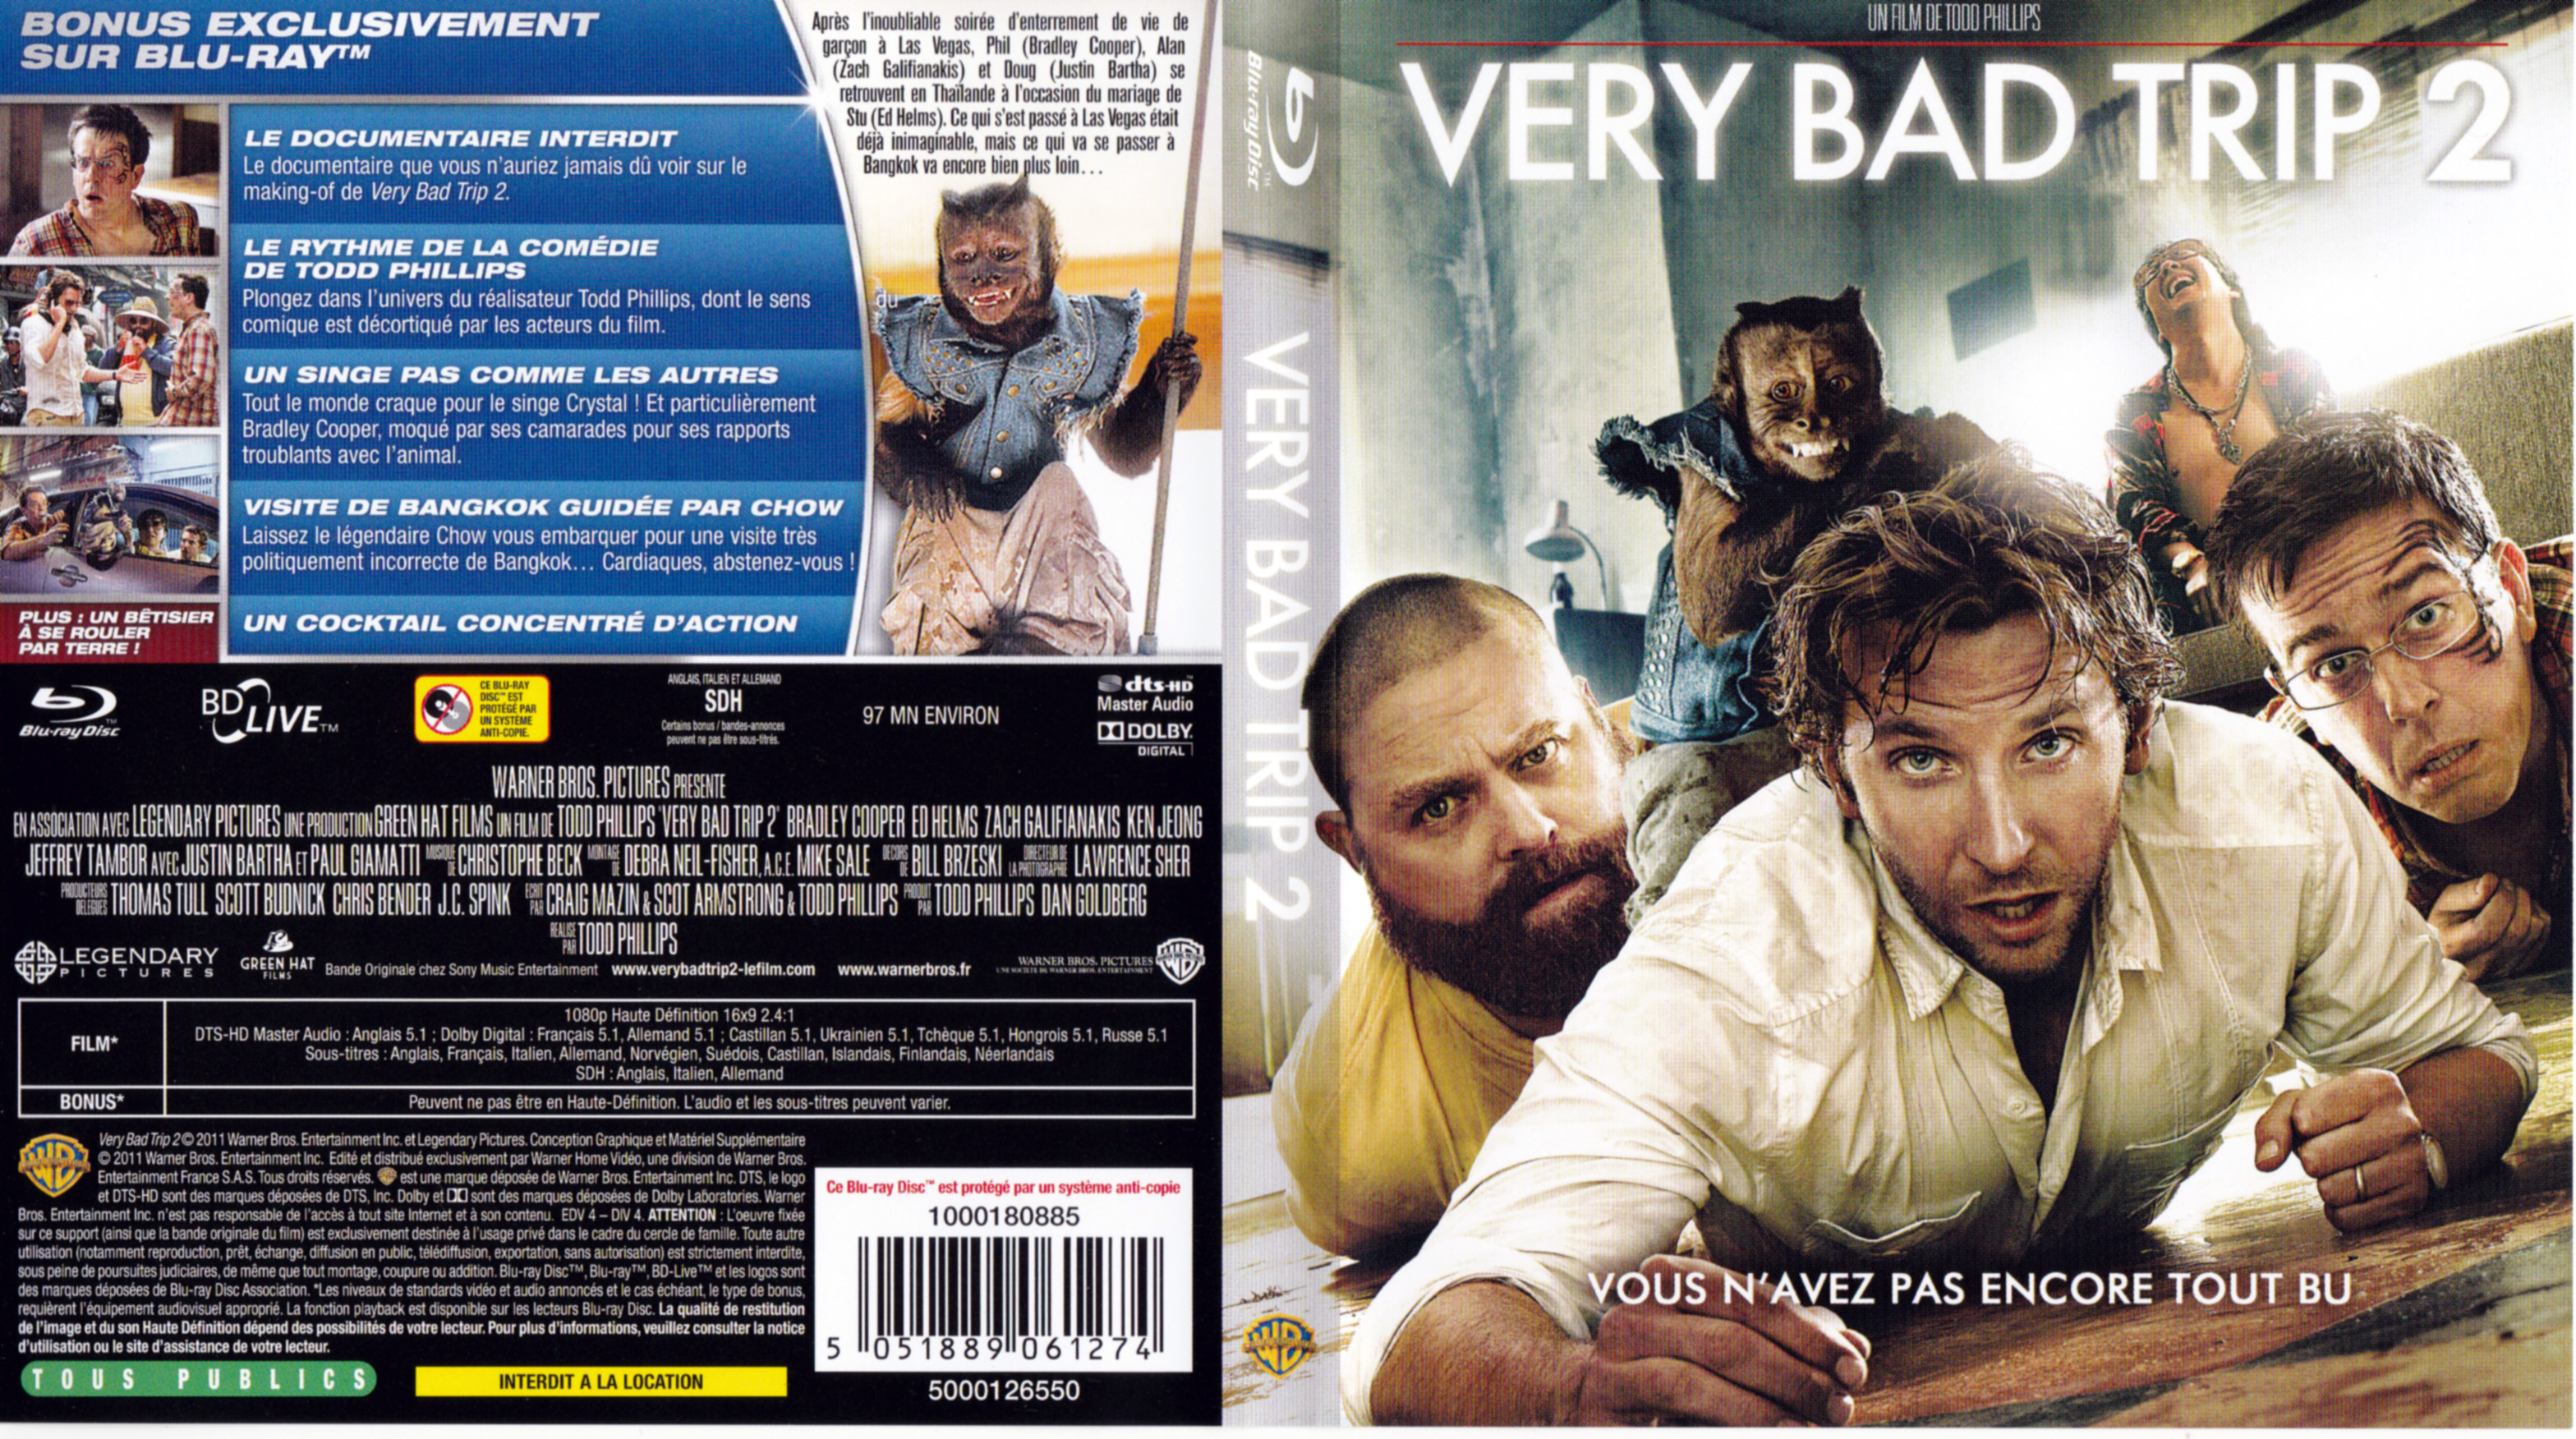 Jaquette DVD Very Bad Trip 2 (BLU-RAY) v2